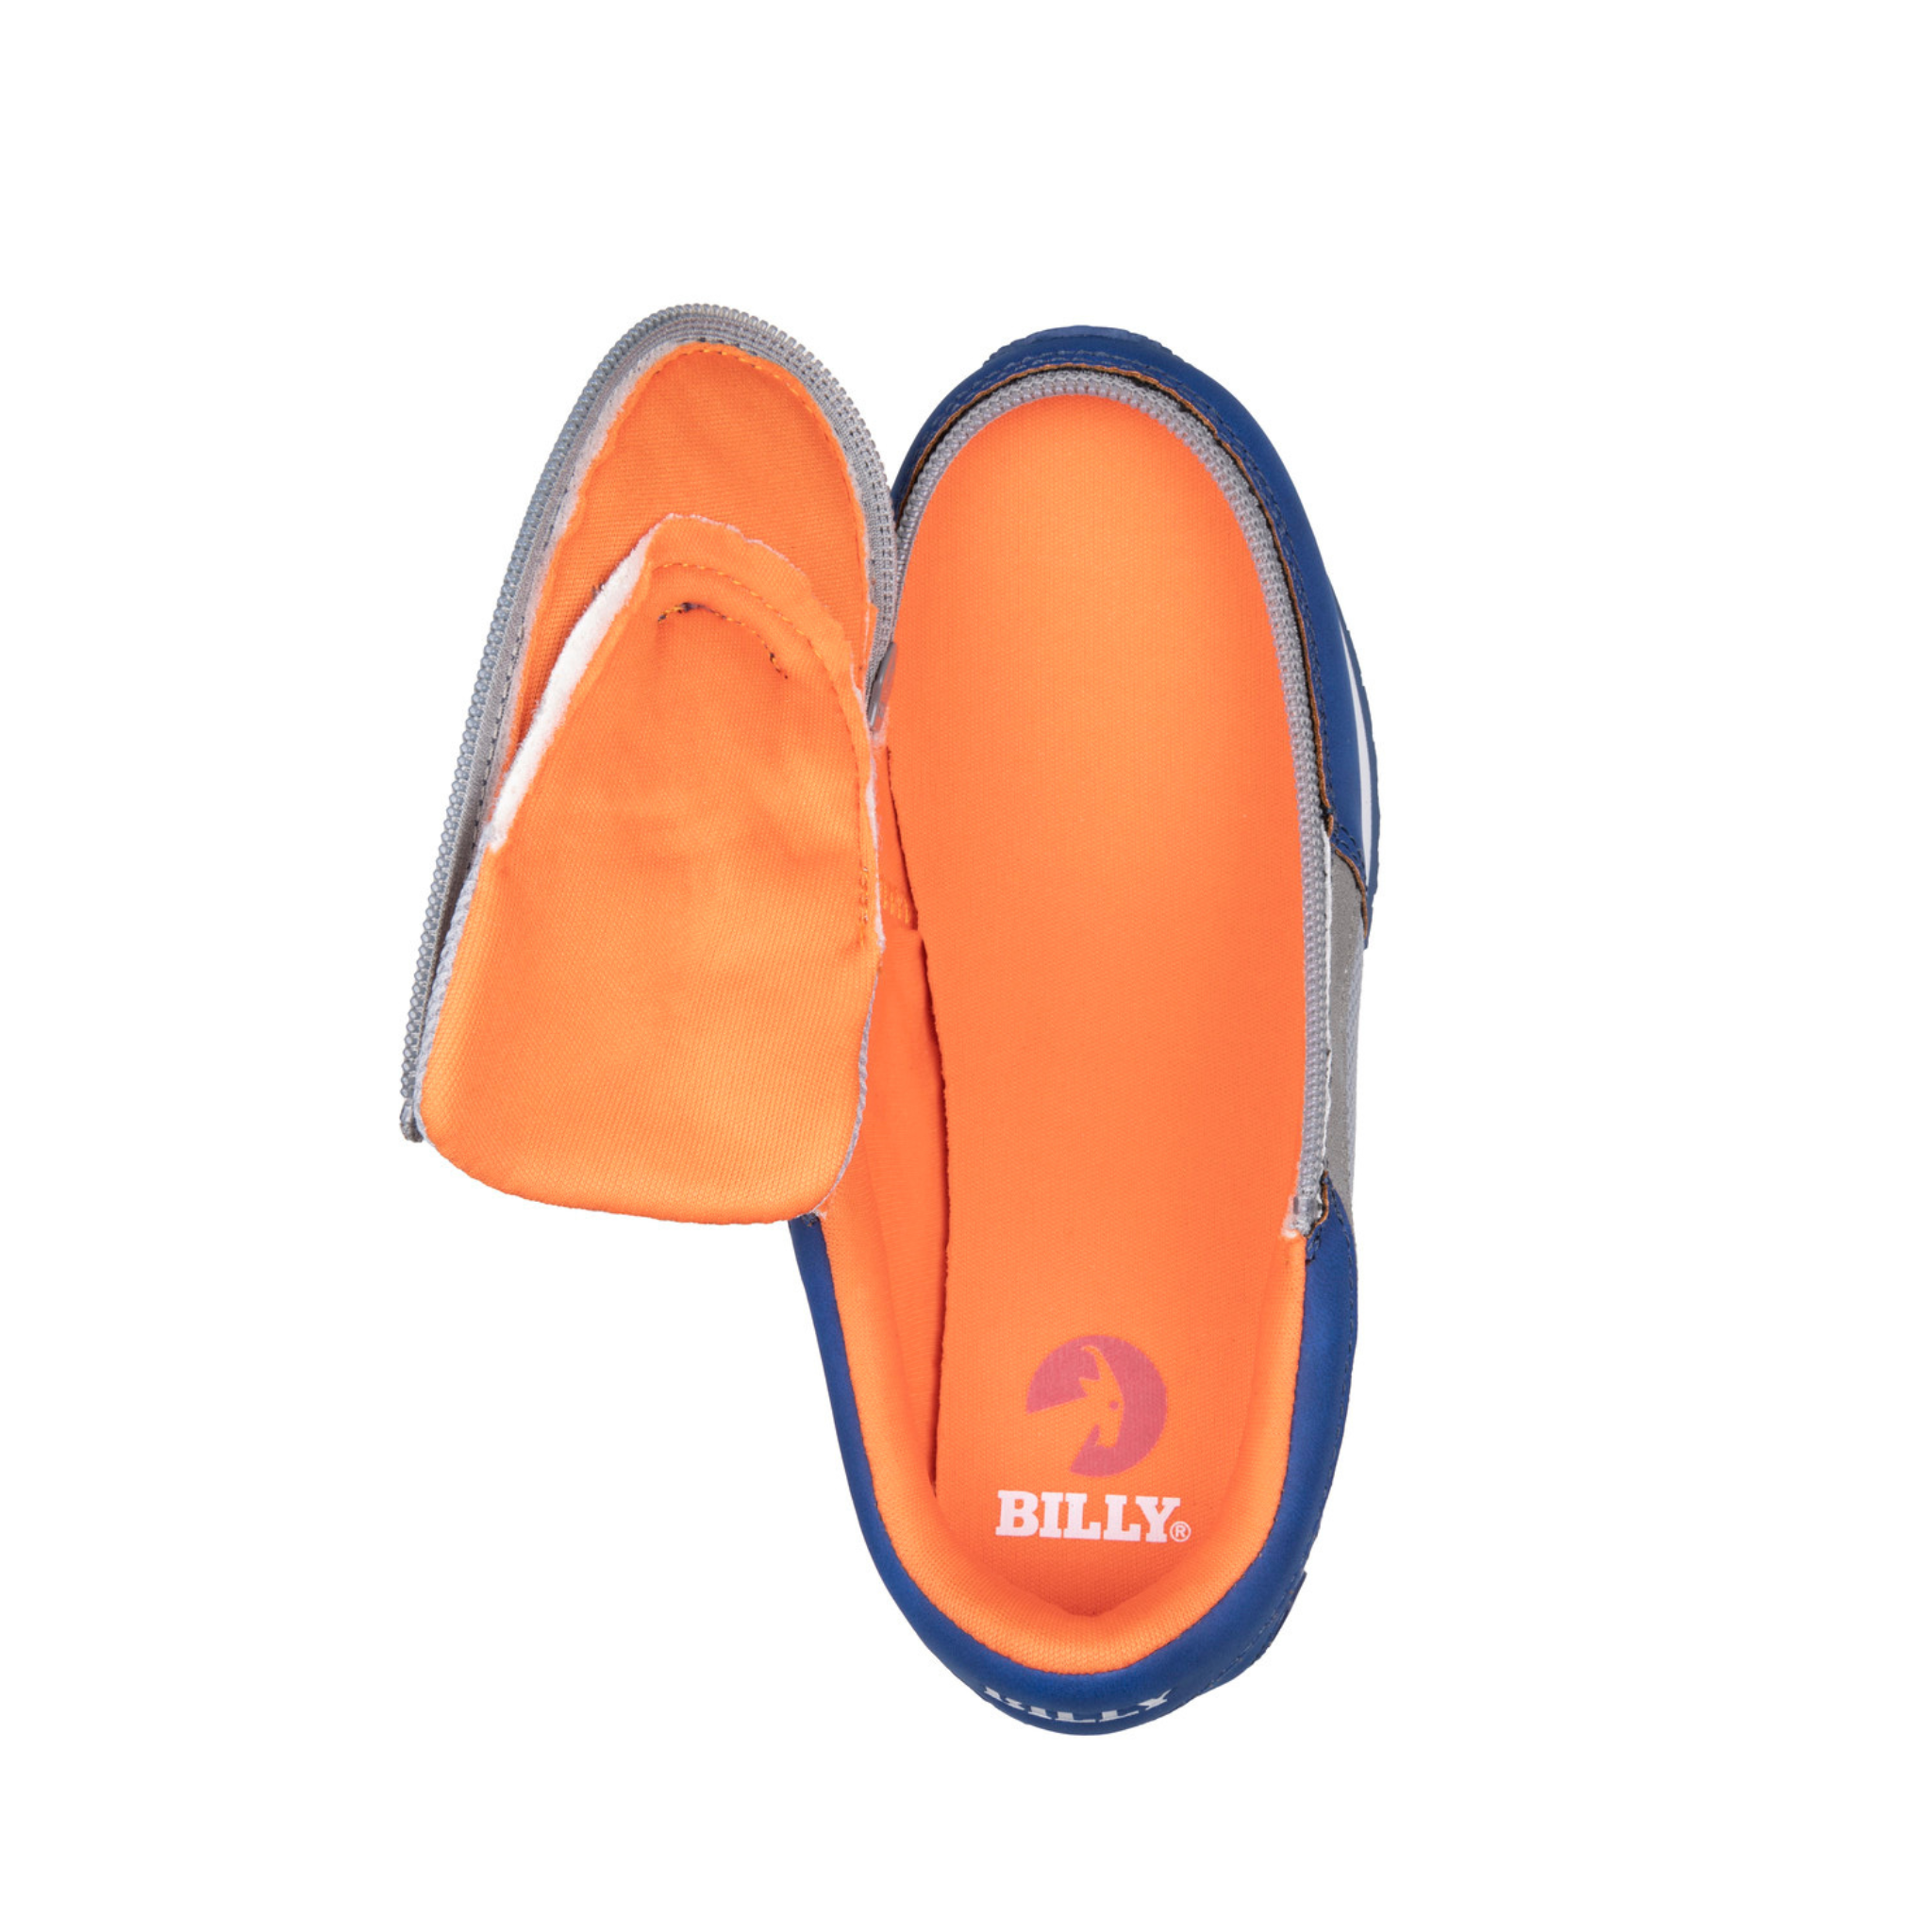 Billy Footwear (Kids) - Navy / Orange Faux Suede Trainers